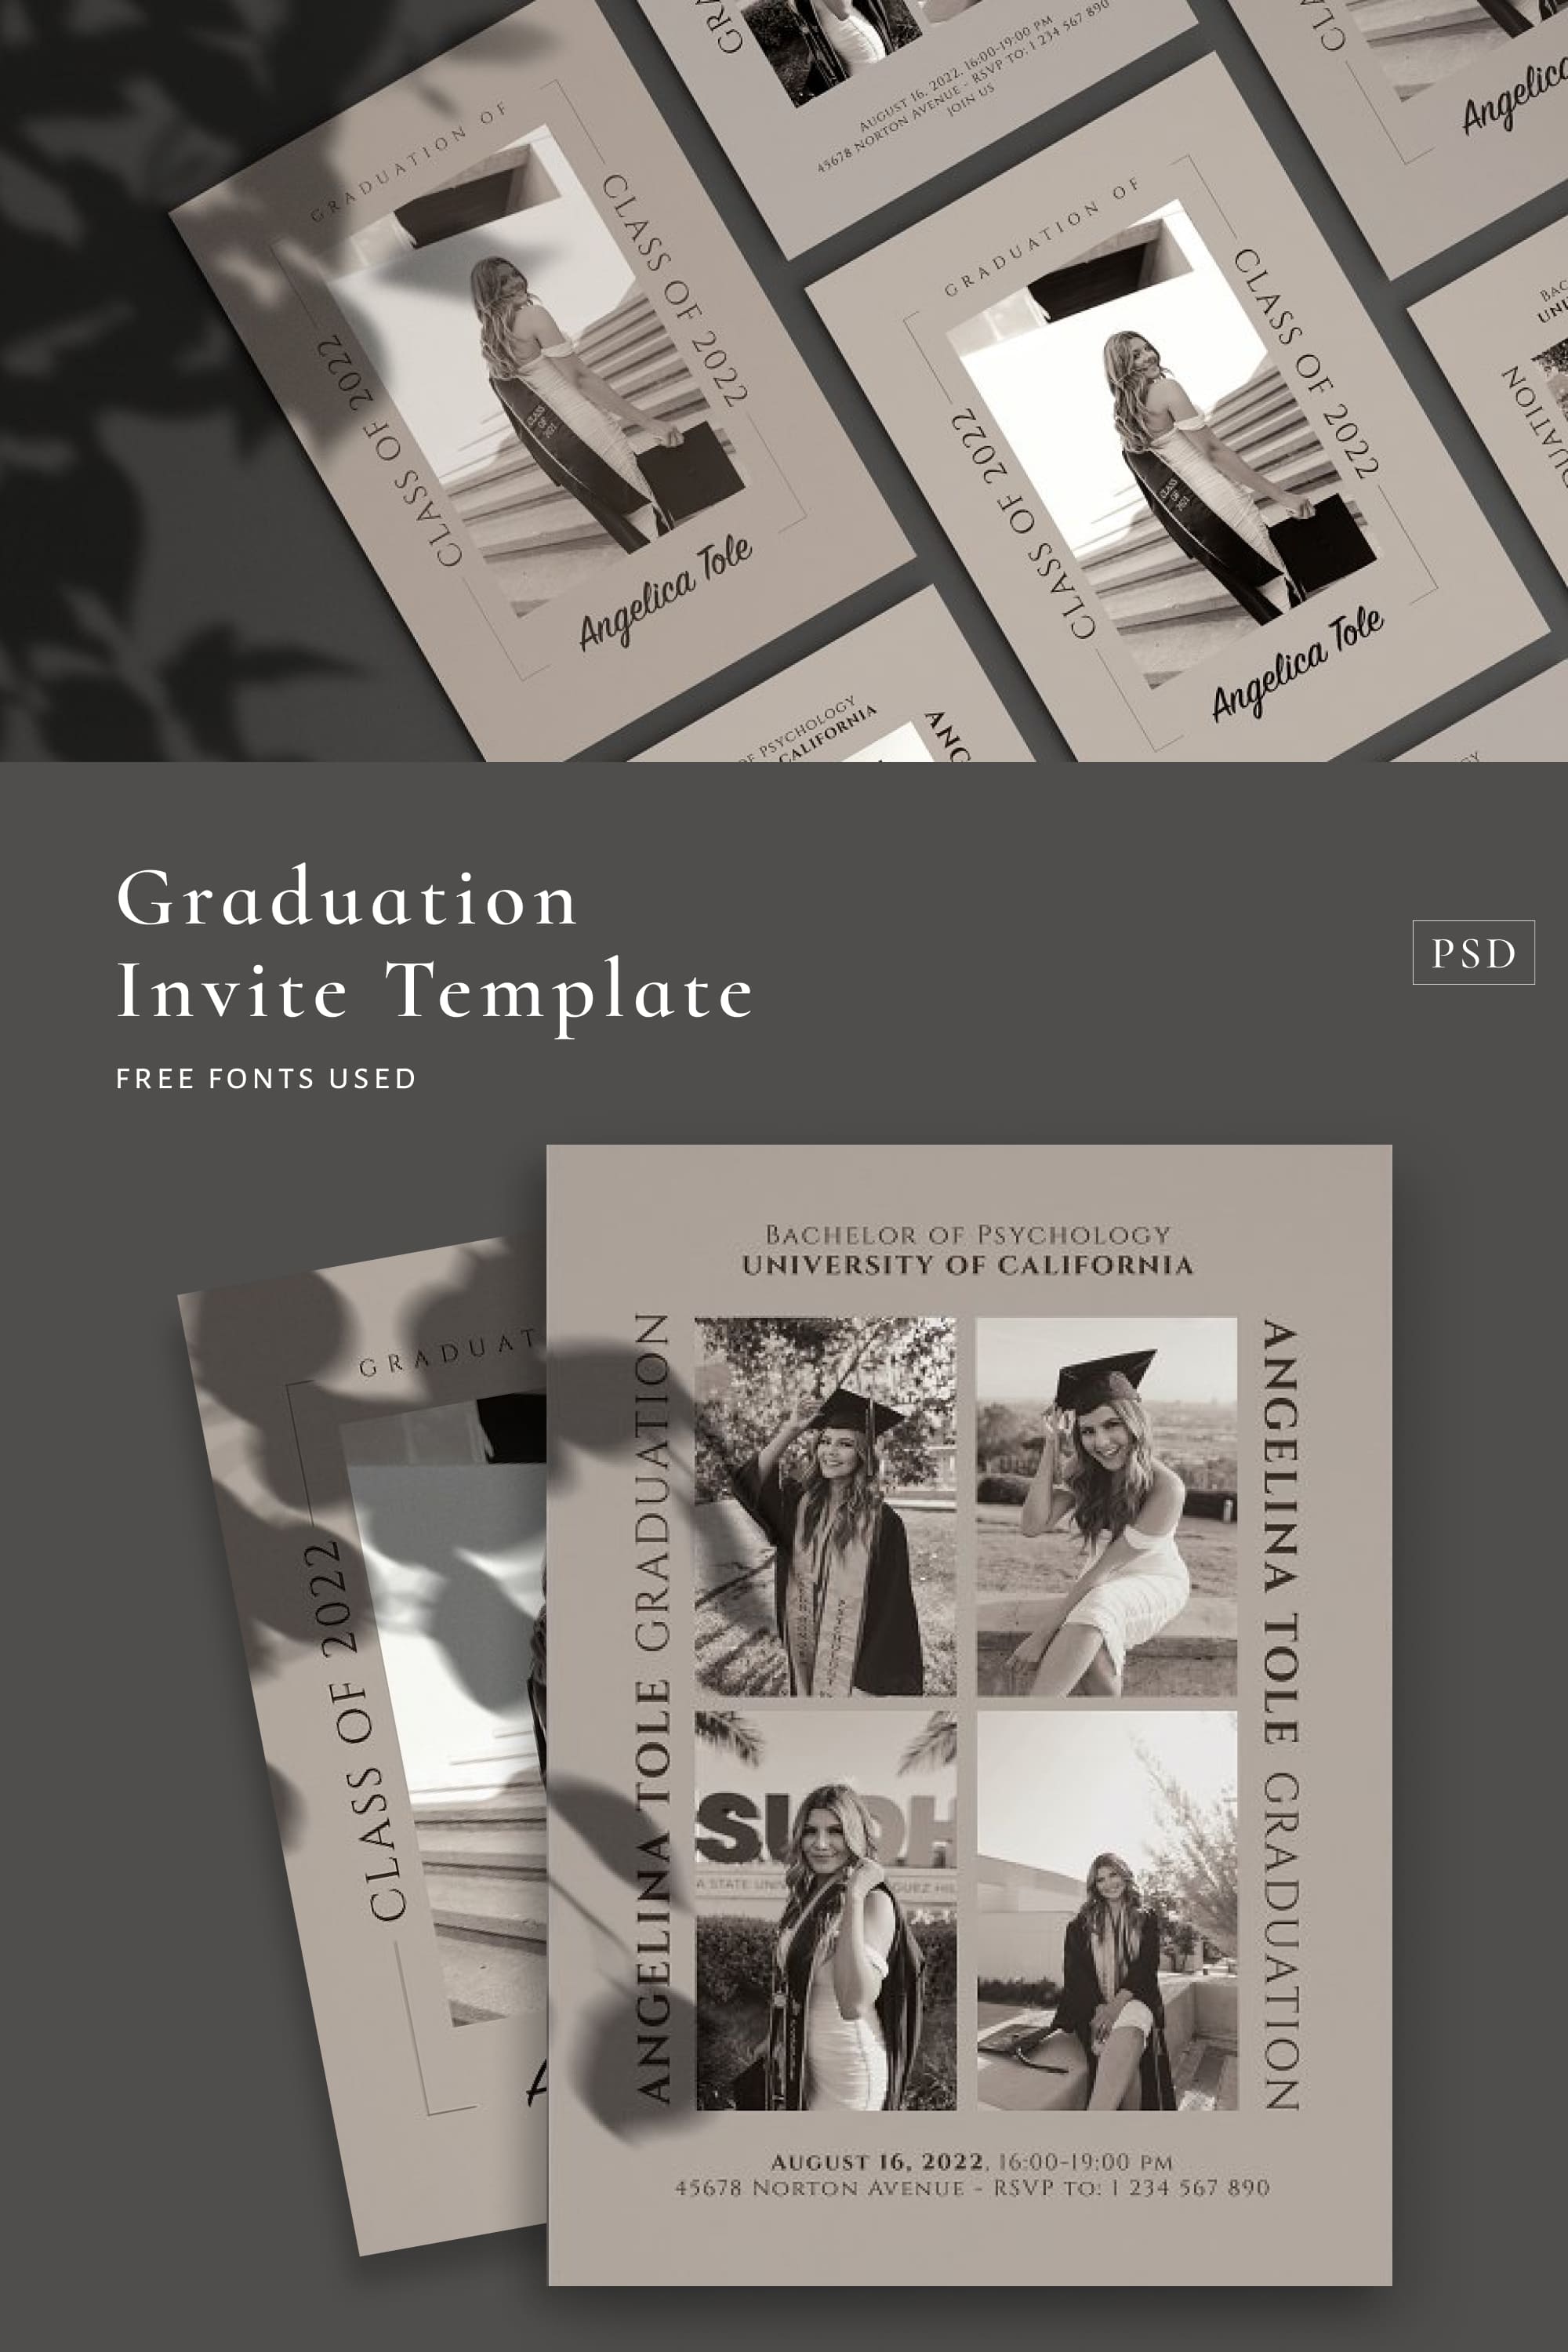 Graduation Invite Template PSD Pinterest.